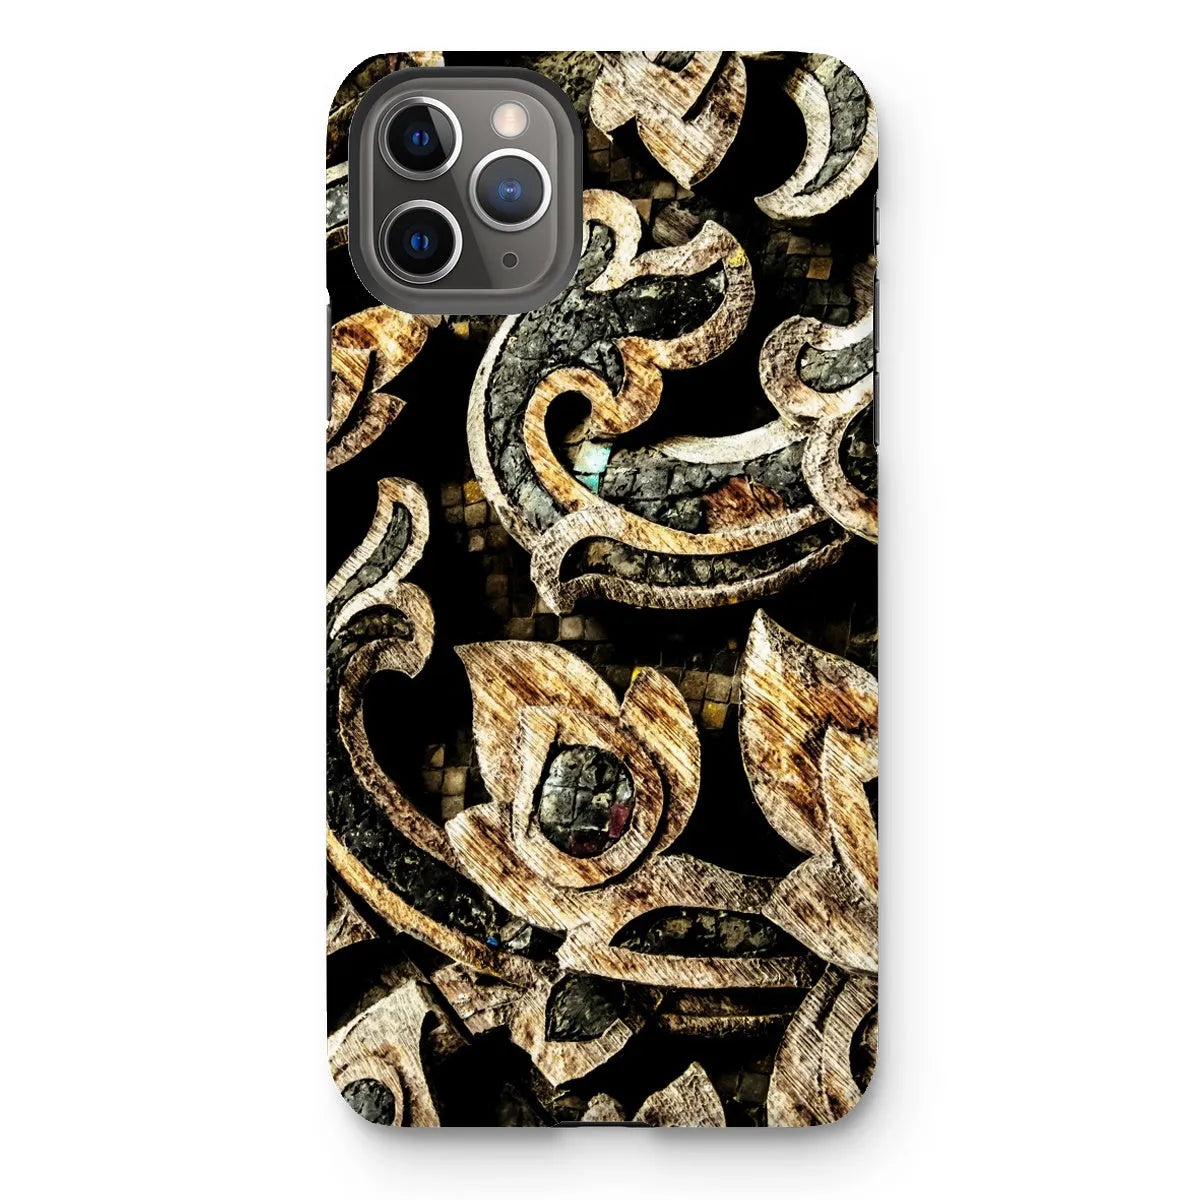 Against The Grain Tough Phone Case - Iphone 11 Pro Max / Matte - Mobile Phone Cases - Aesthetic Art